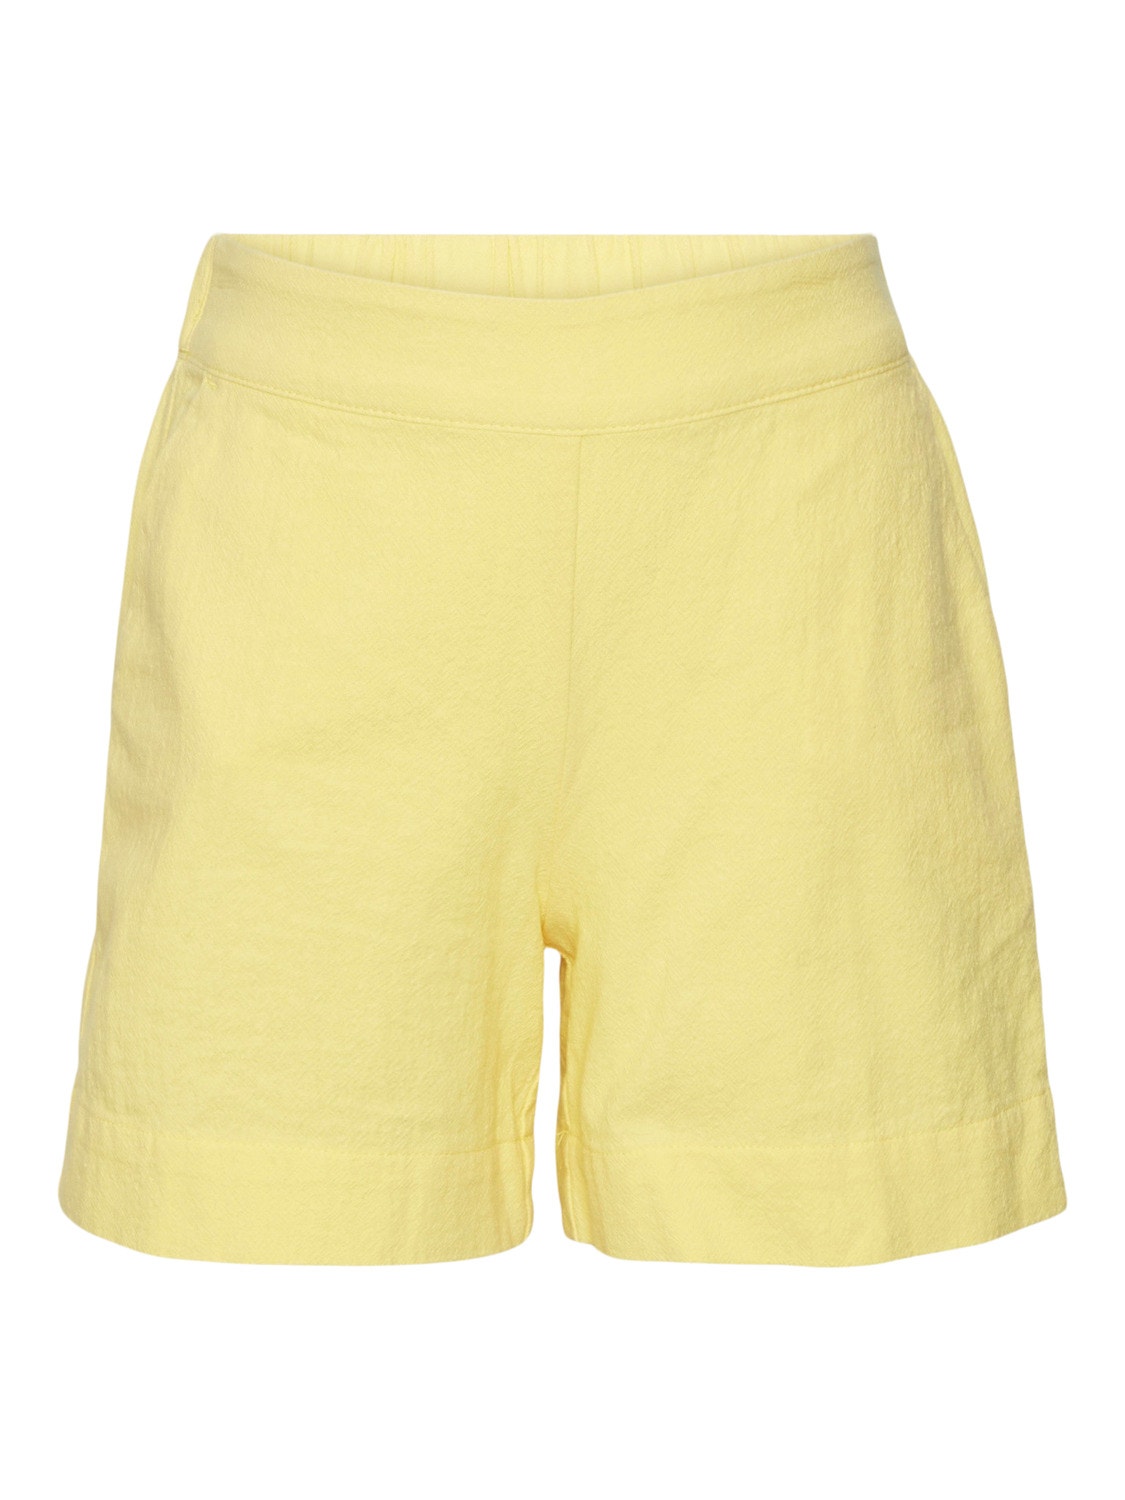 Vero Moda VMHART Shorts -Lemon Zest - 10304268